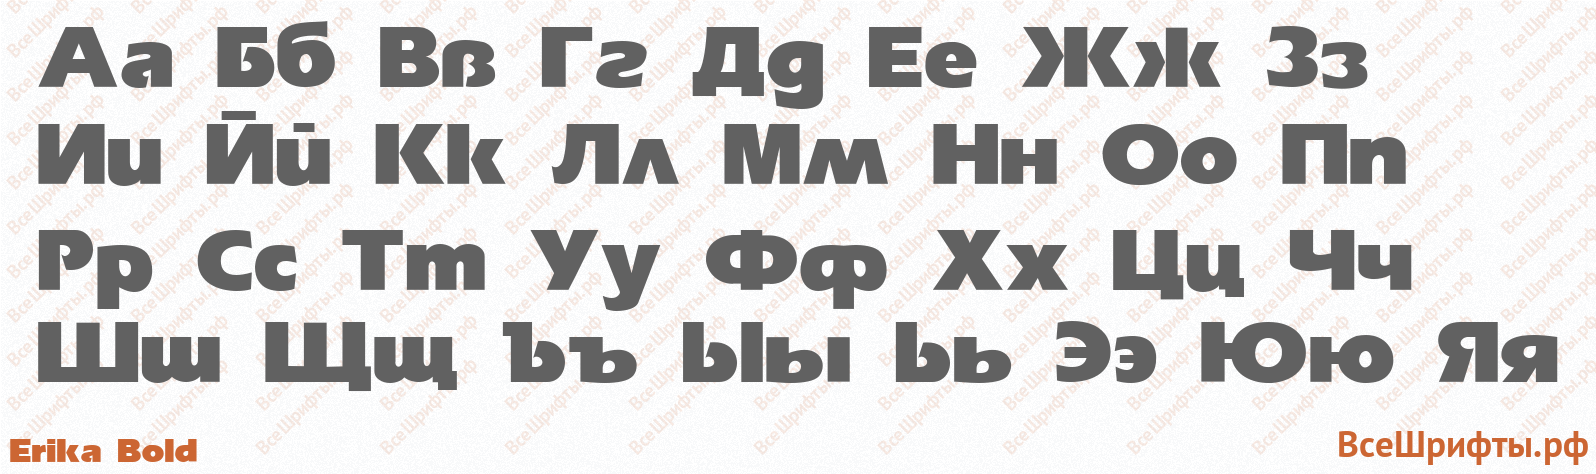 Шрифт Erika Bold с русскими буквами